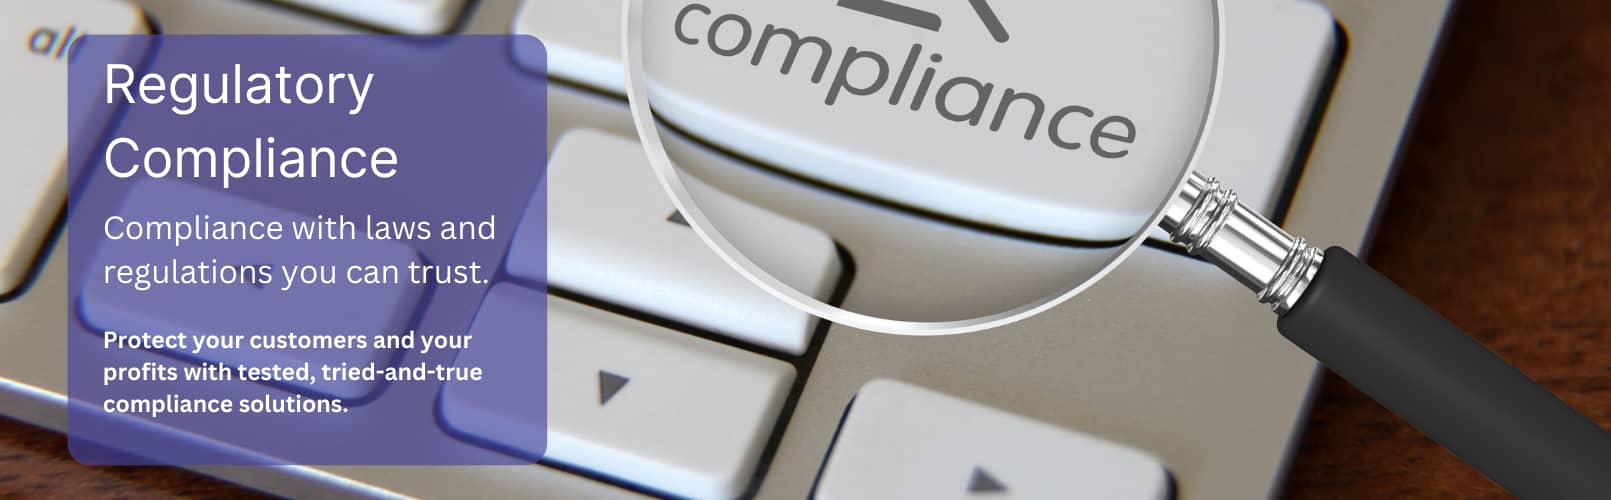 Regulatory compliance image on keyboard.